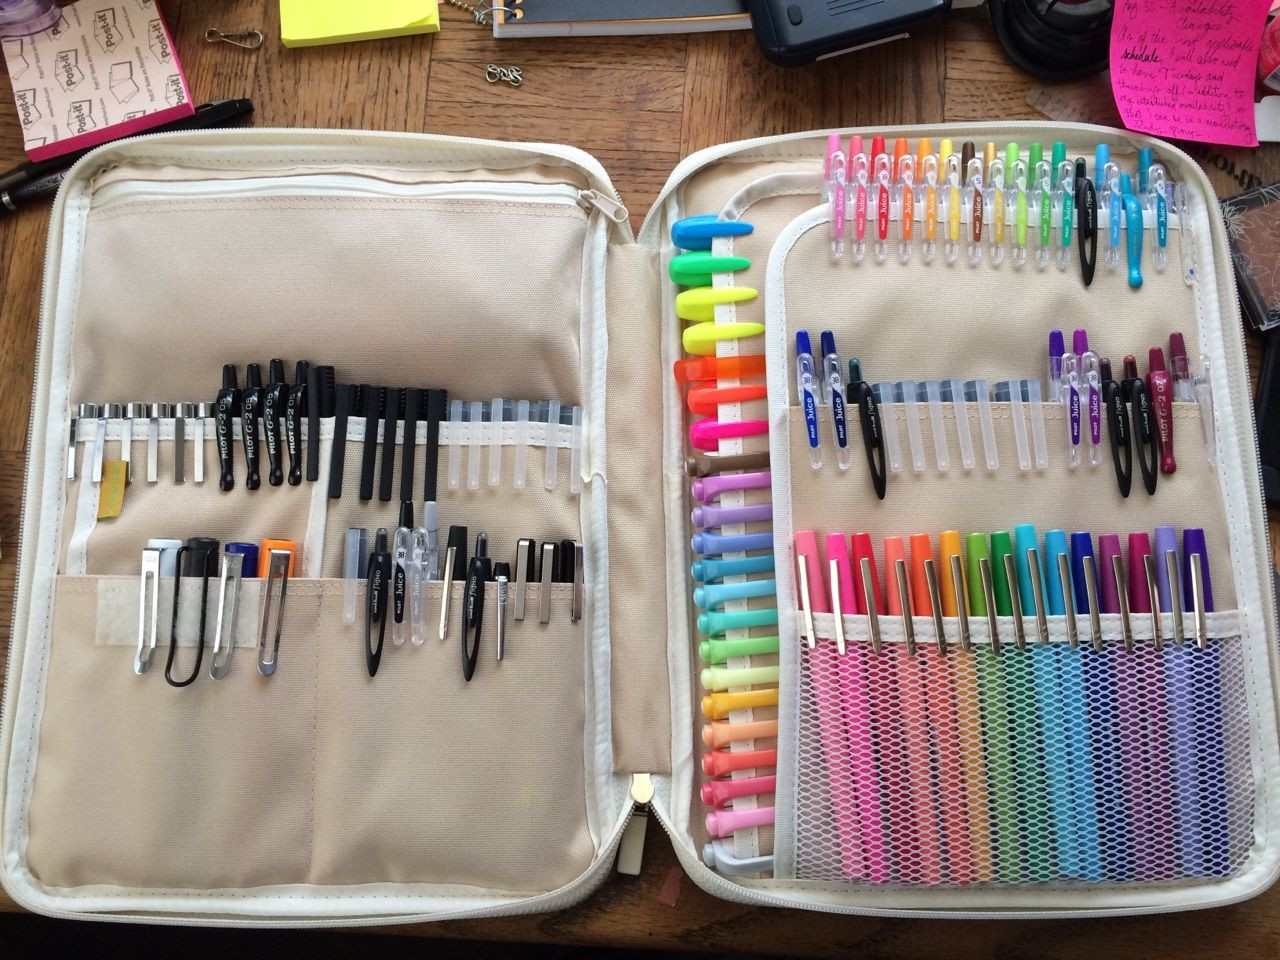 DIY Pen Organizer
 Best 25 Pen organizer ideas on Pinterest